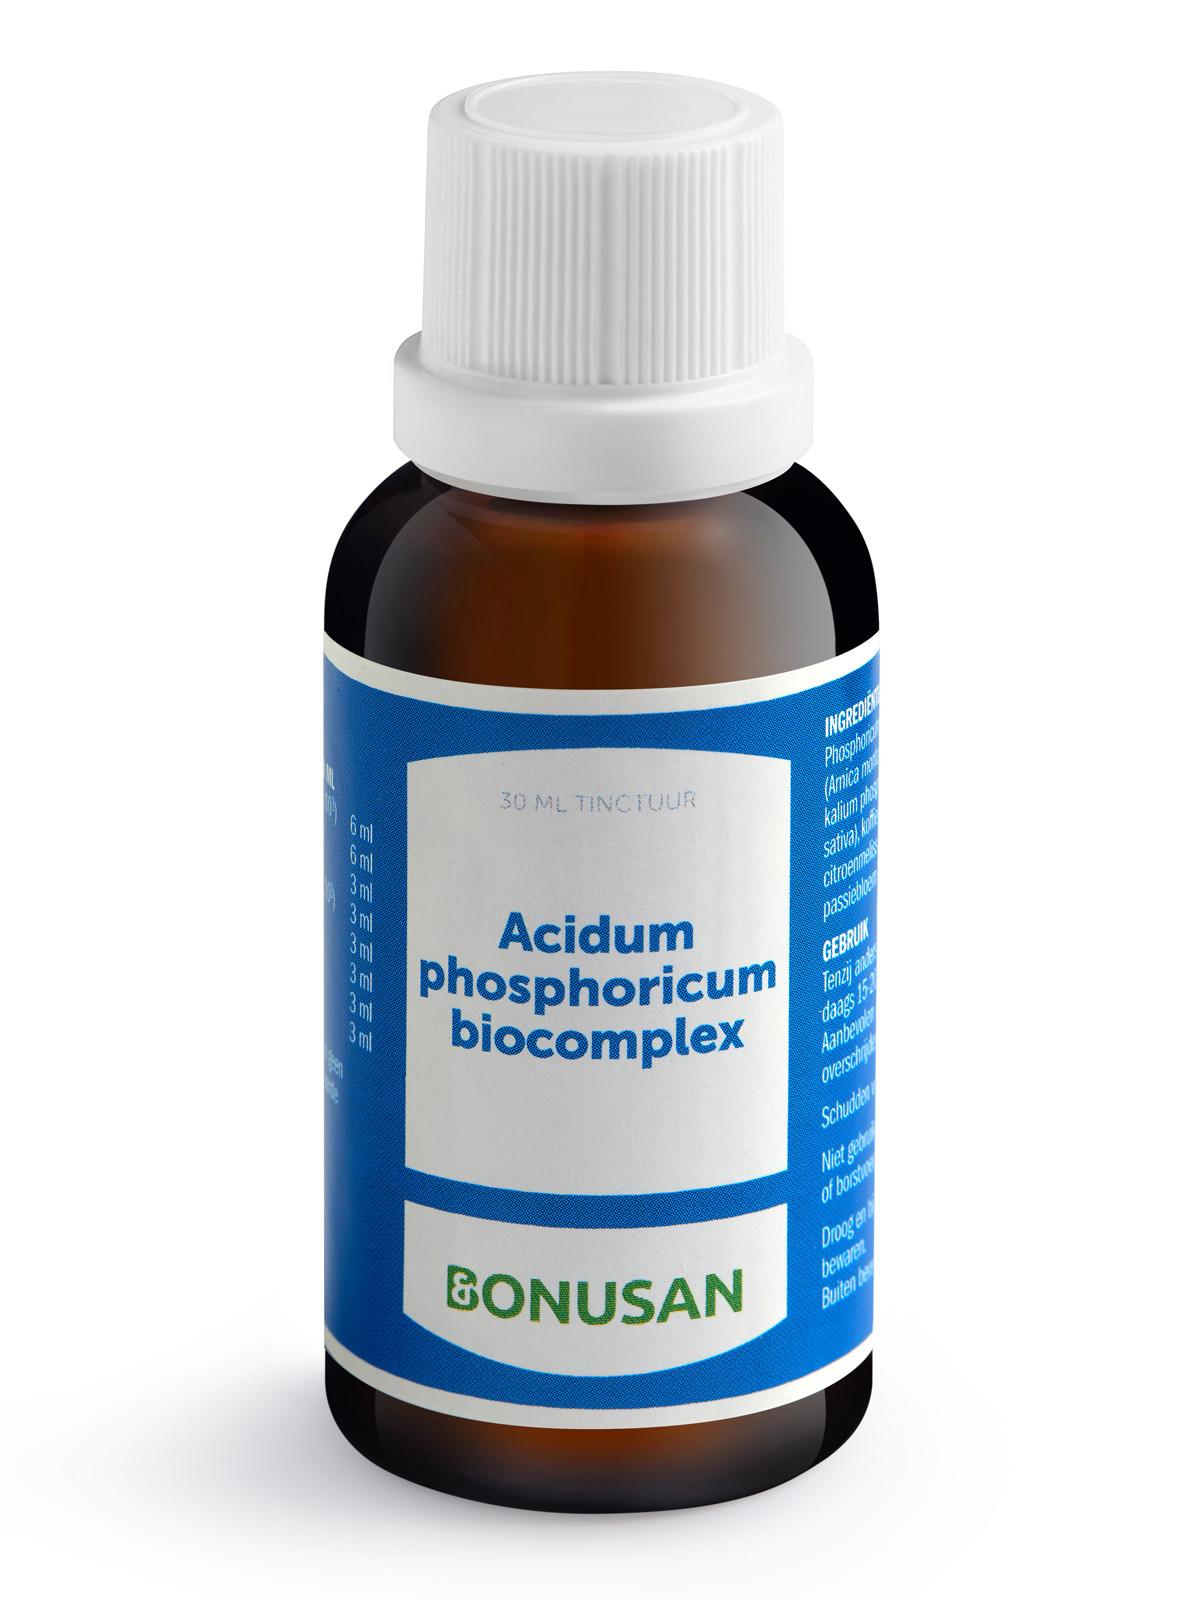 Bonusan - Acidum phosphoricum biocomplex (binnenkort uit assortiment)